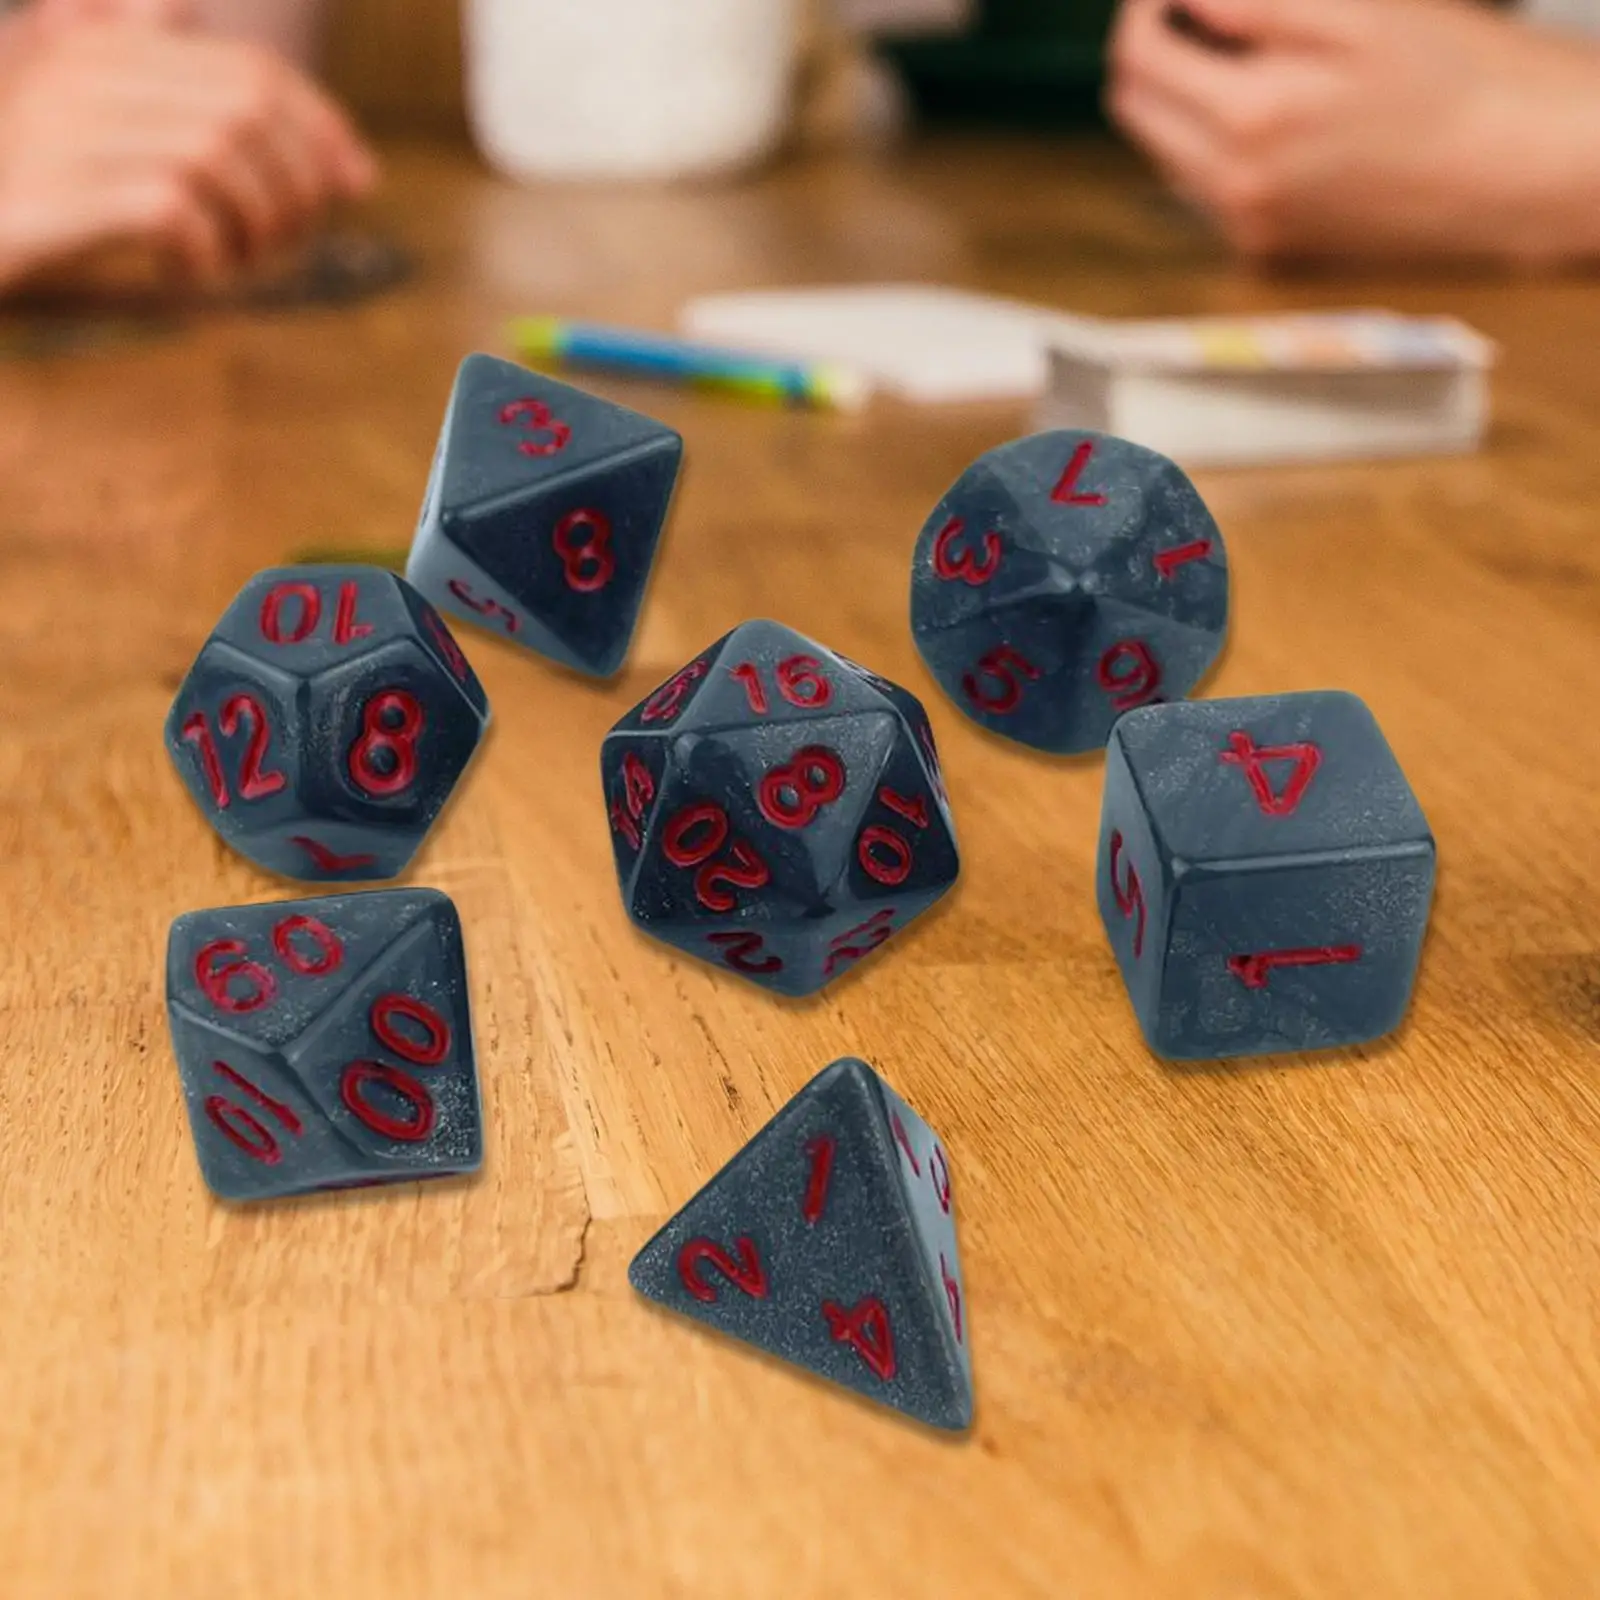 7x Acrylic Polyhedron Dices Multicolour Dices Set Entertainment Toy D4 D8 D10 D6 D12 D20 Party Game Dices for Card Game